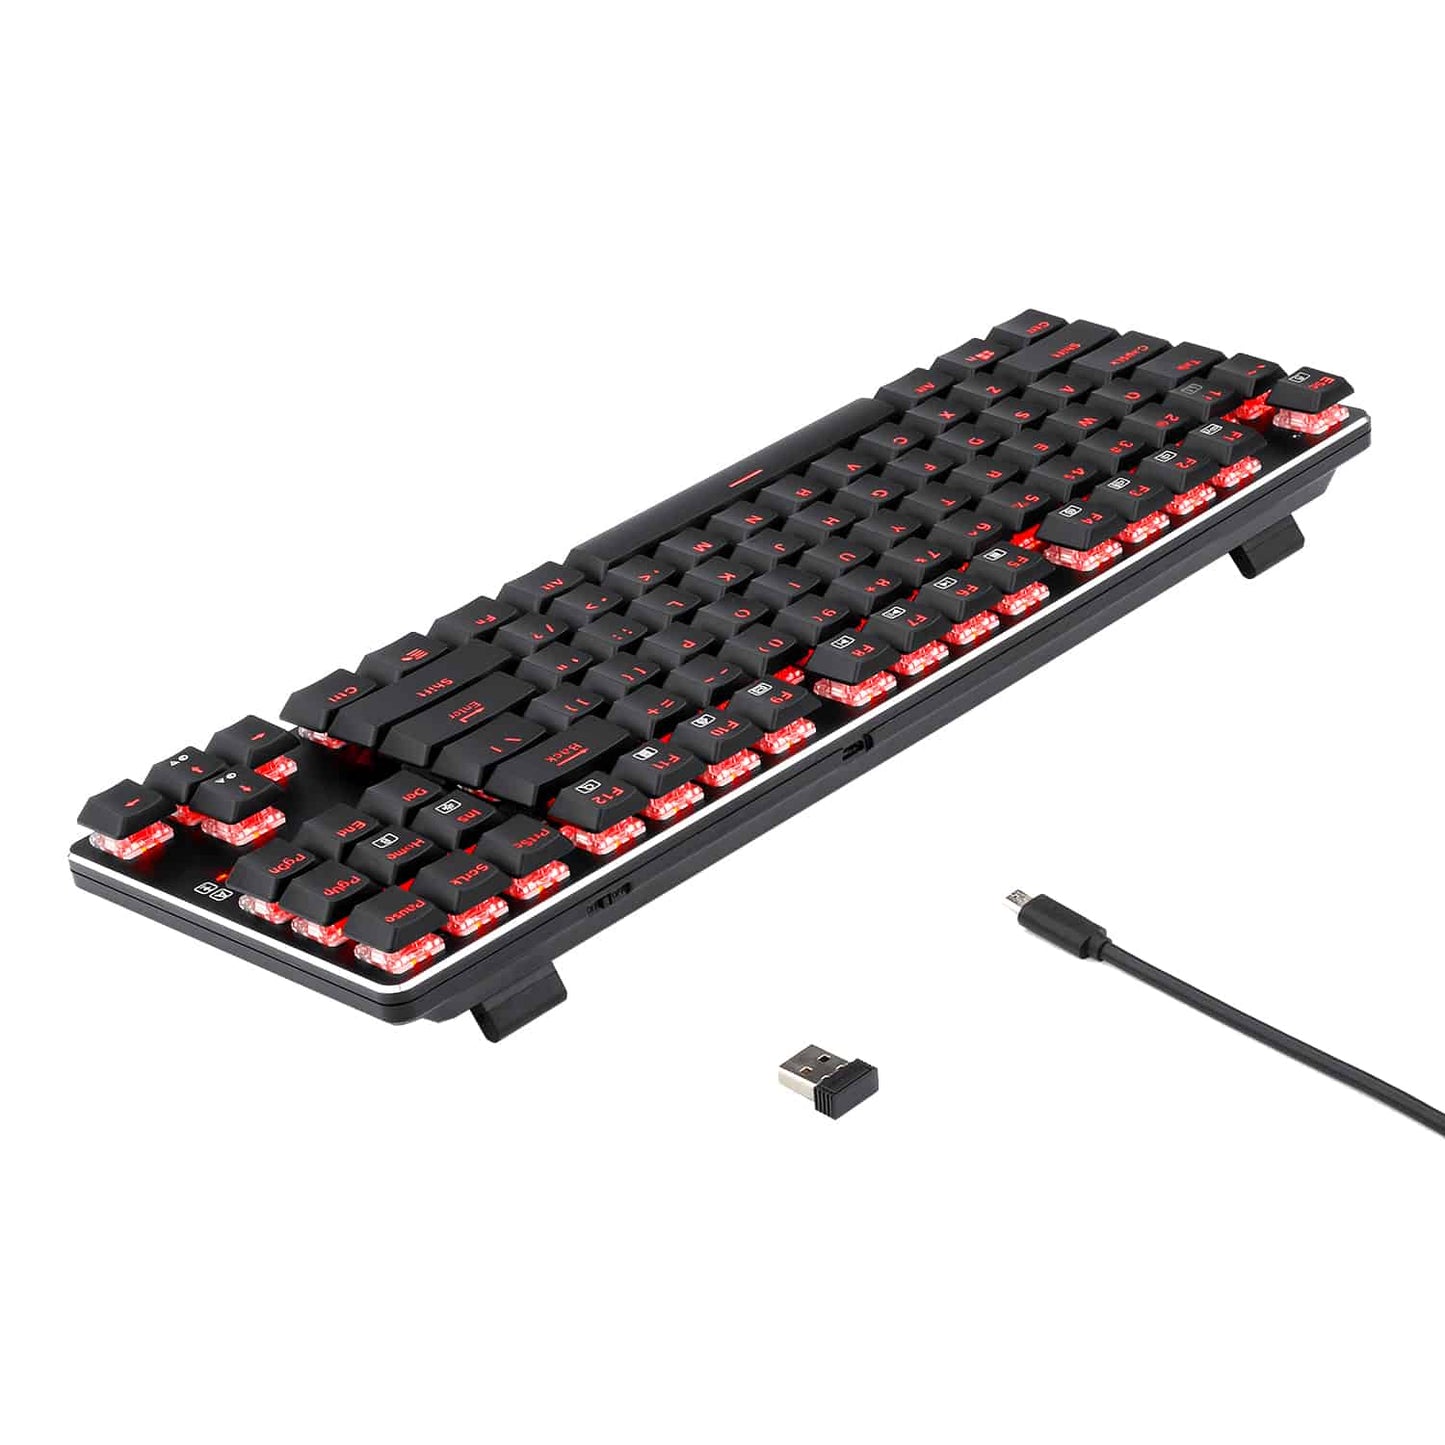 Redragon K590 Wired/Wireless Mechanical Gaming Keyboard, Low Profile Keys Red Switch